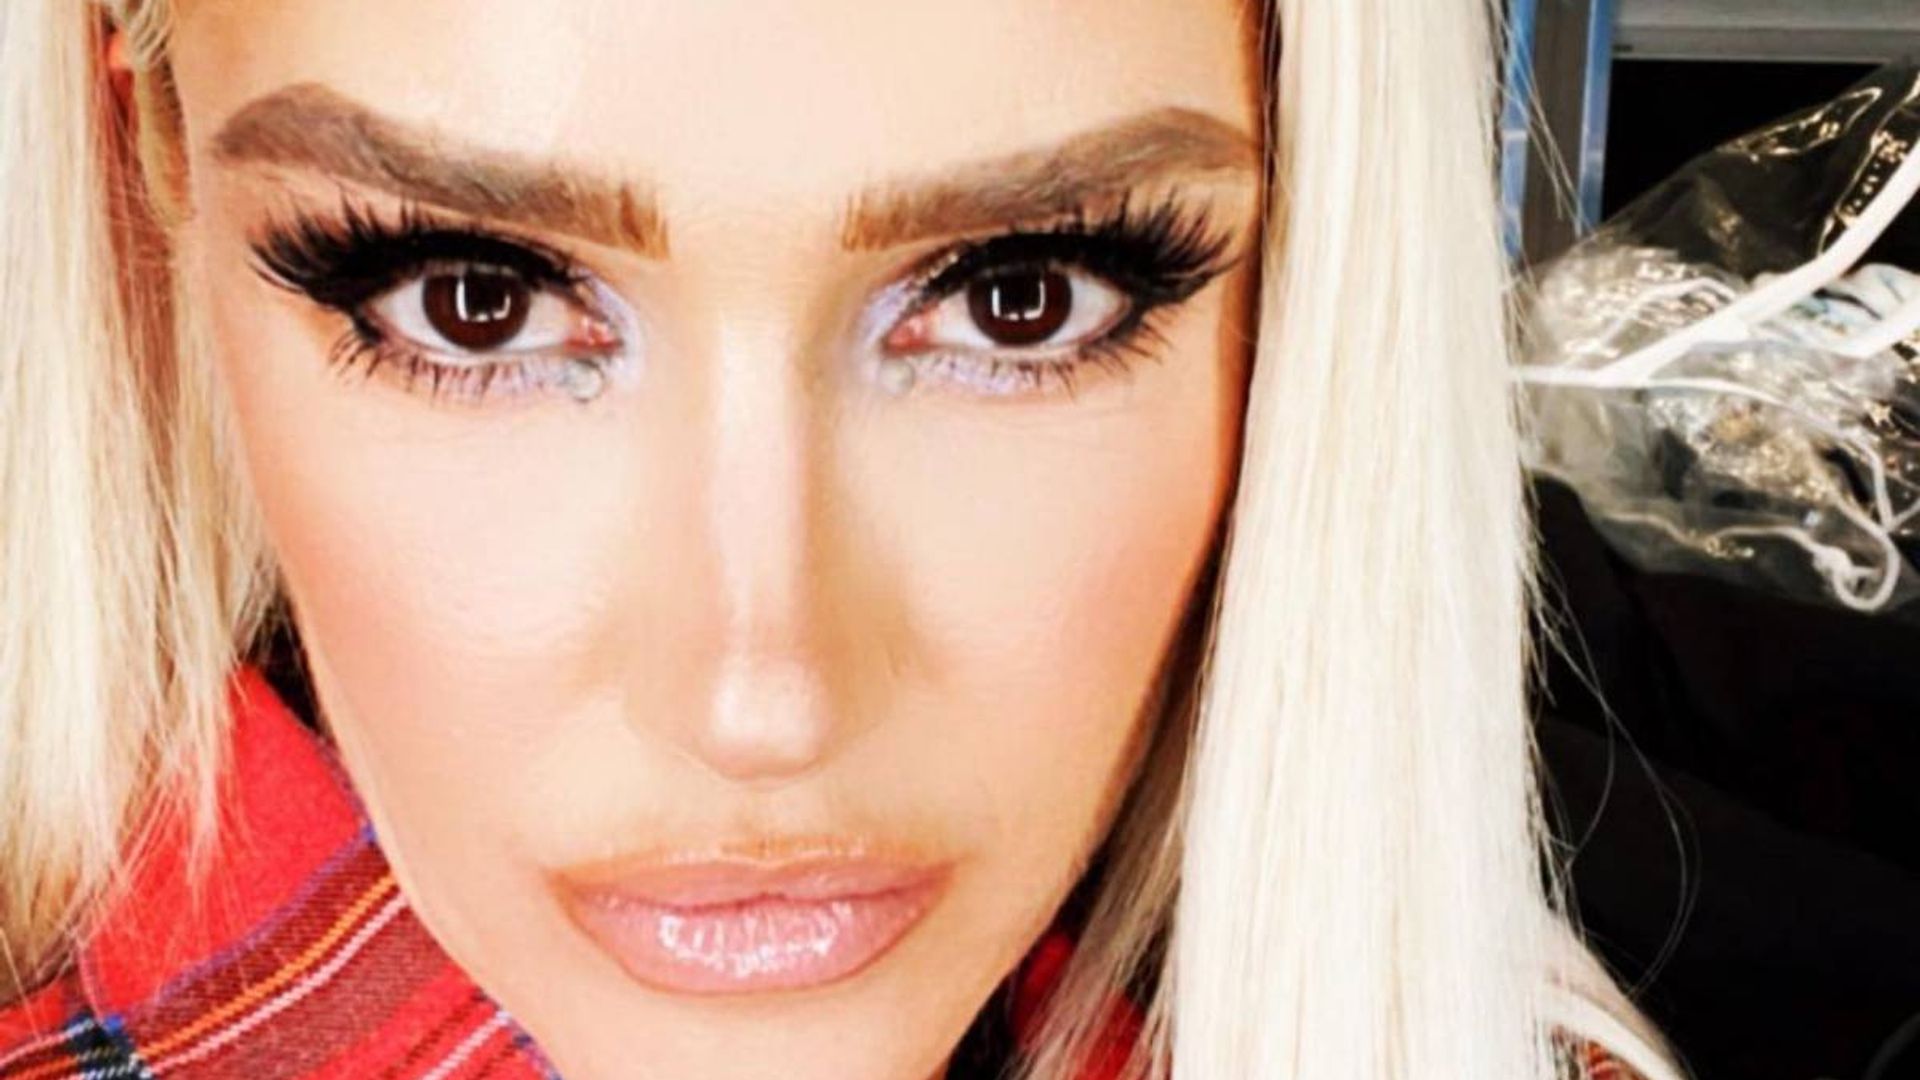 Gwen Stefani mistaken for Khloe Kardashian in head-turning new photo